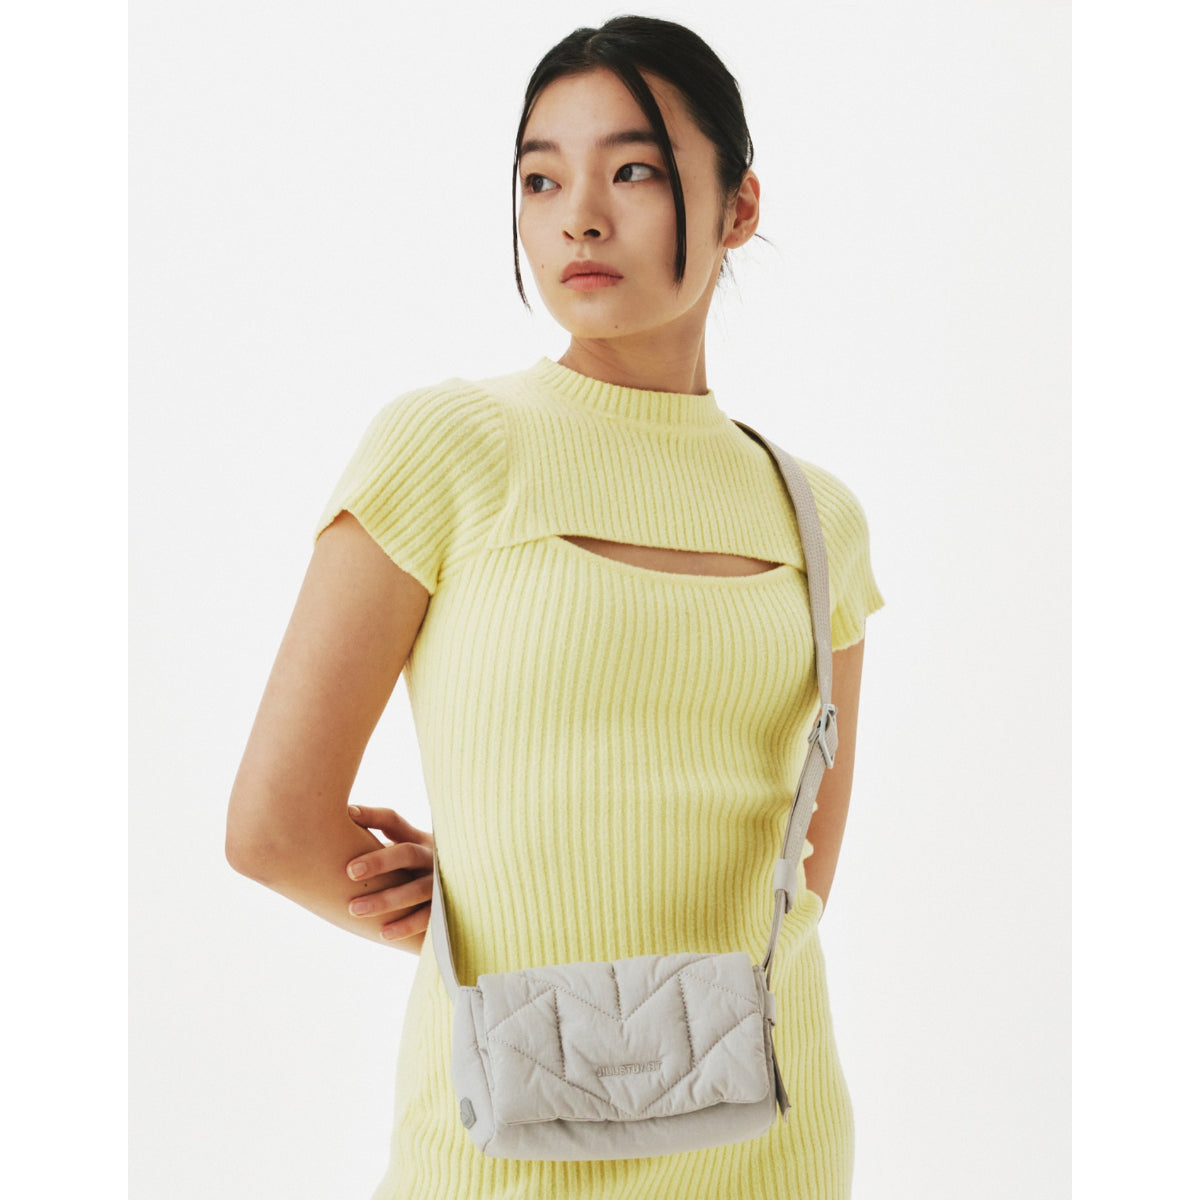 JILLSTUART Rosella Padding Gray Small Shoulder Crossbody Bag Lightweight nylon fabric material/ from Seoul, Korea